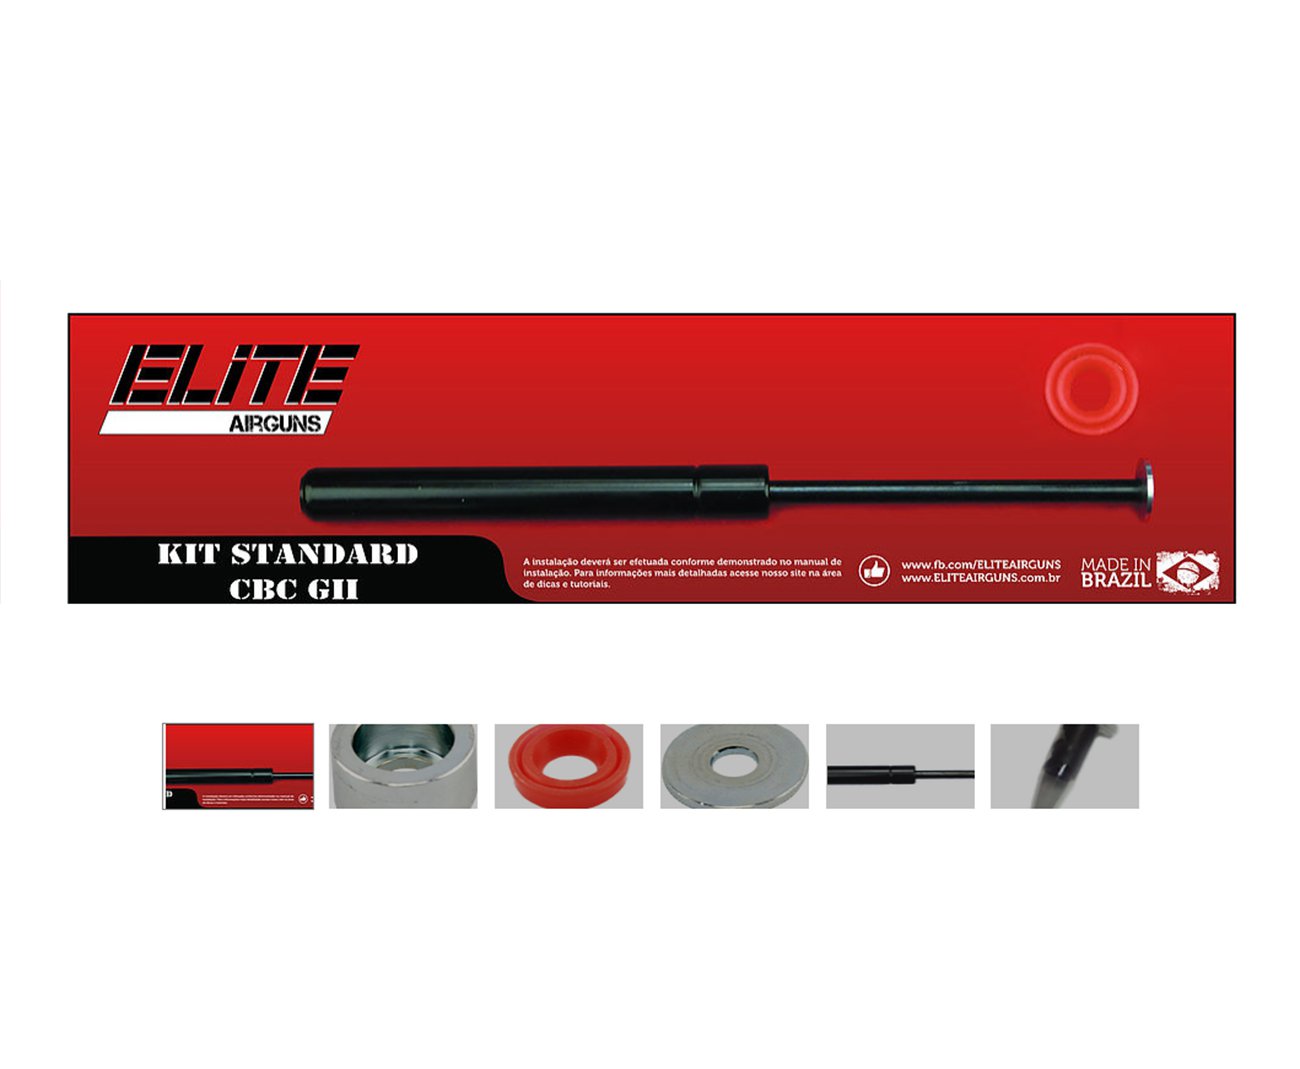 Kit Customização Standard Carabina Cbc Gii - 60kg - Elite Airguns